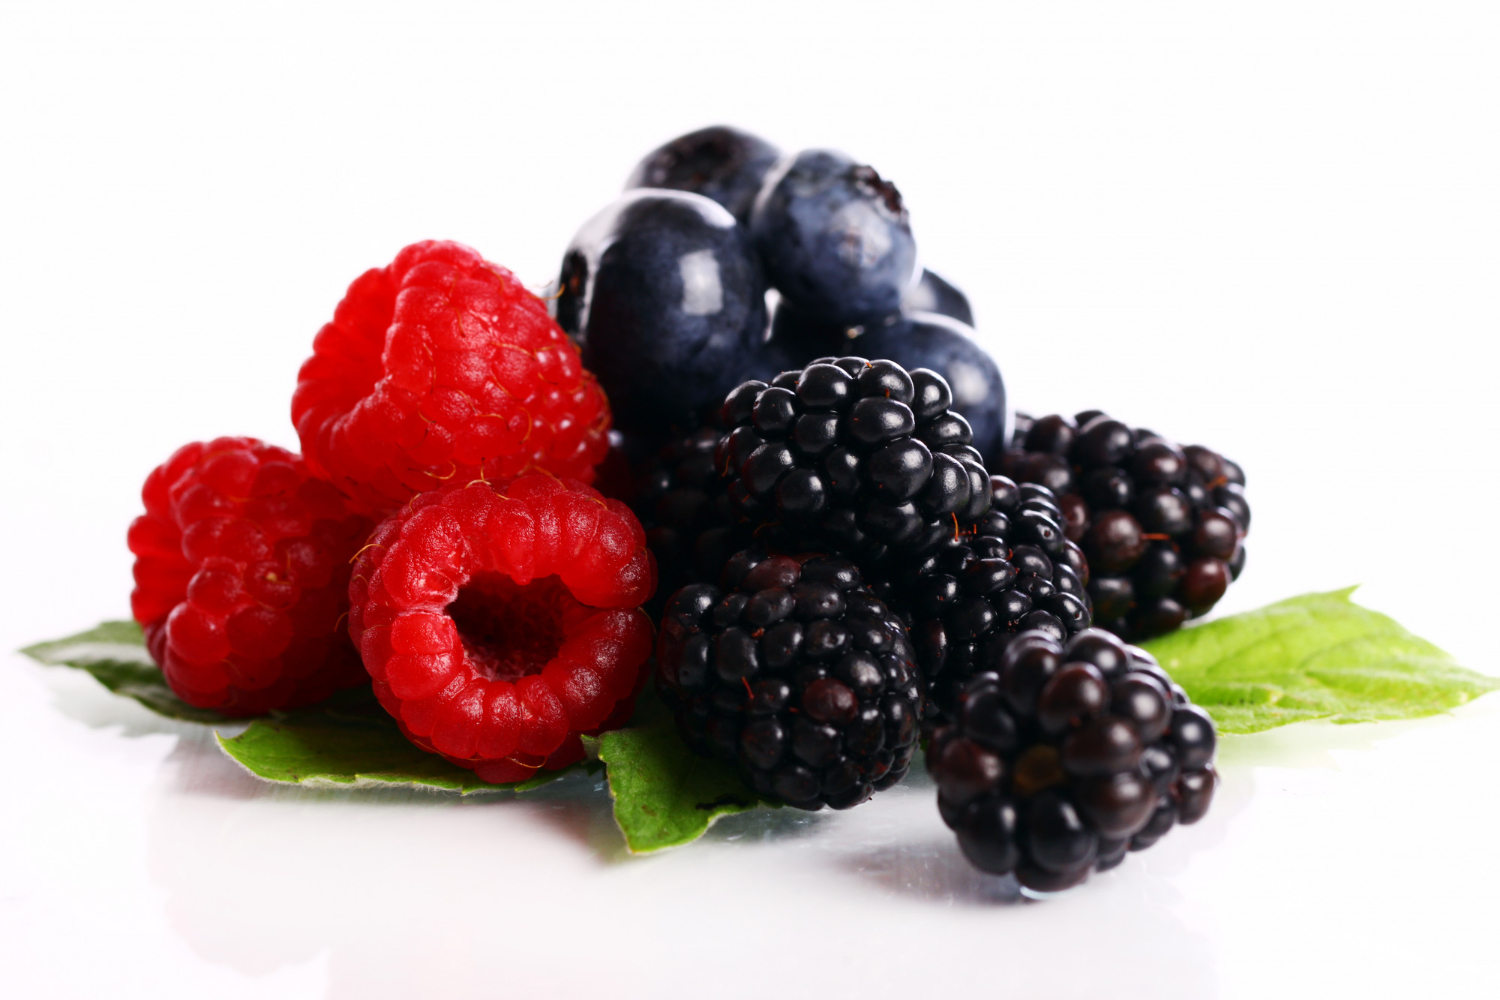 manfaat buah berry